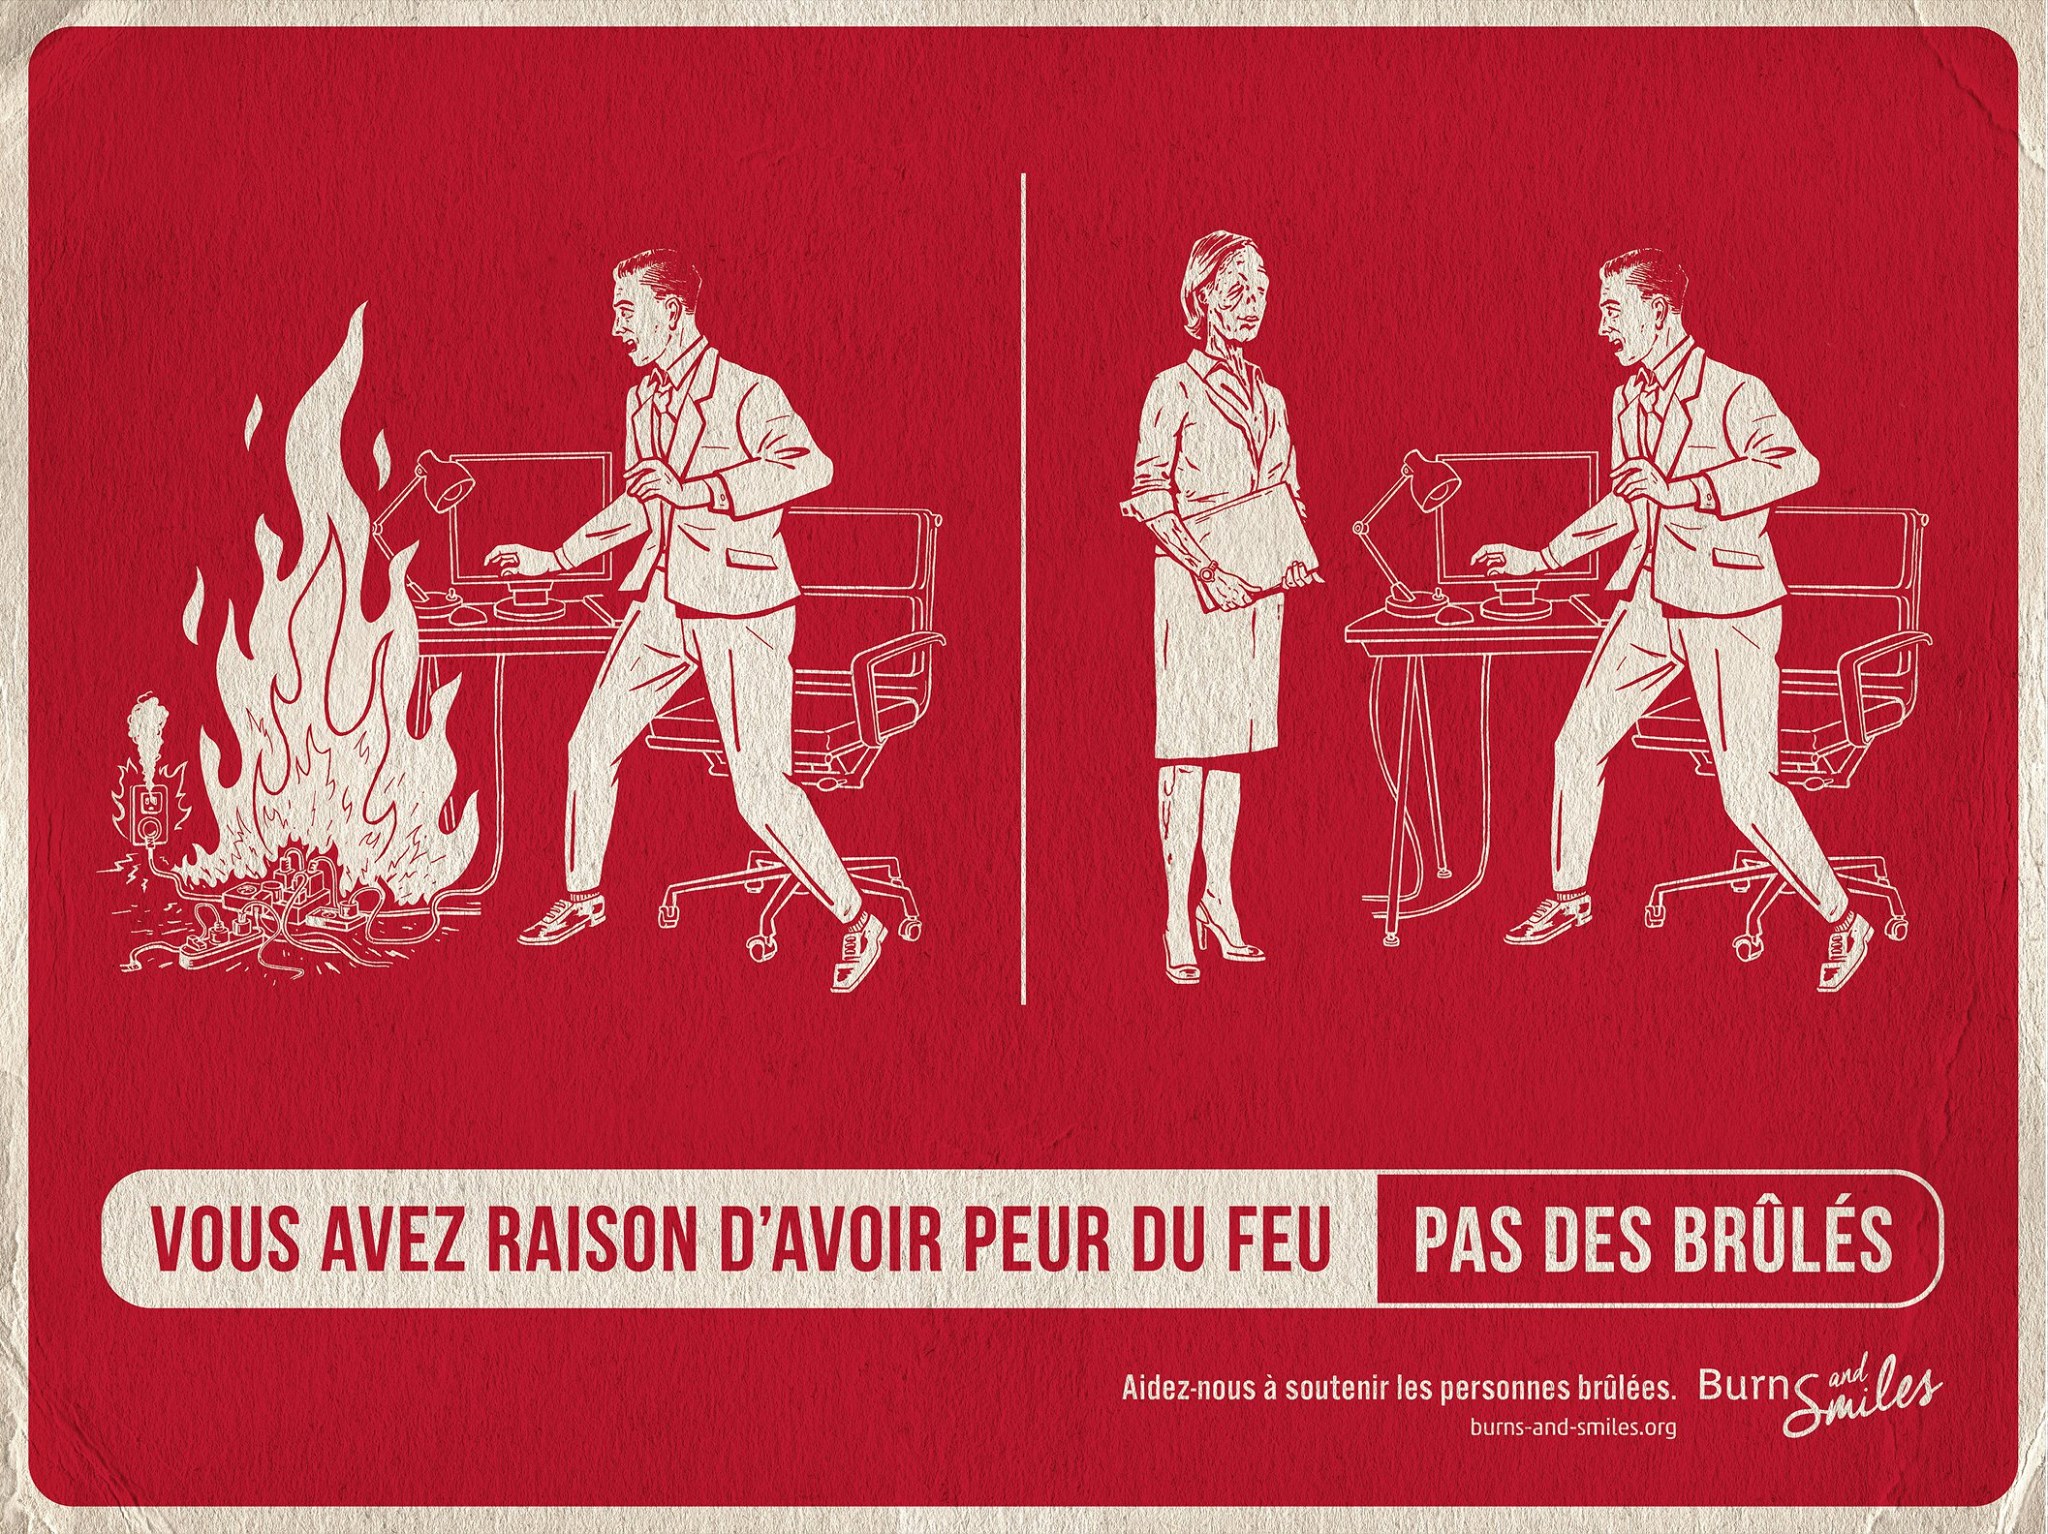 burns-and-smiles-publicite-communication-print-press-ad-feu-brules-burn-agence-tbwa-paris-4